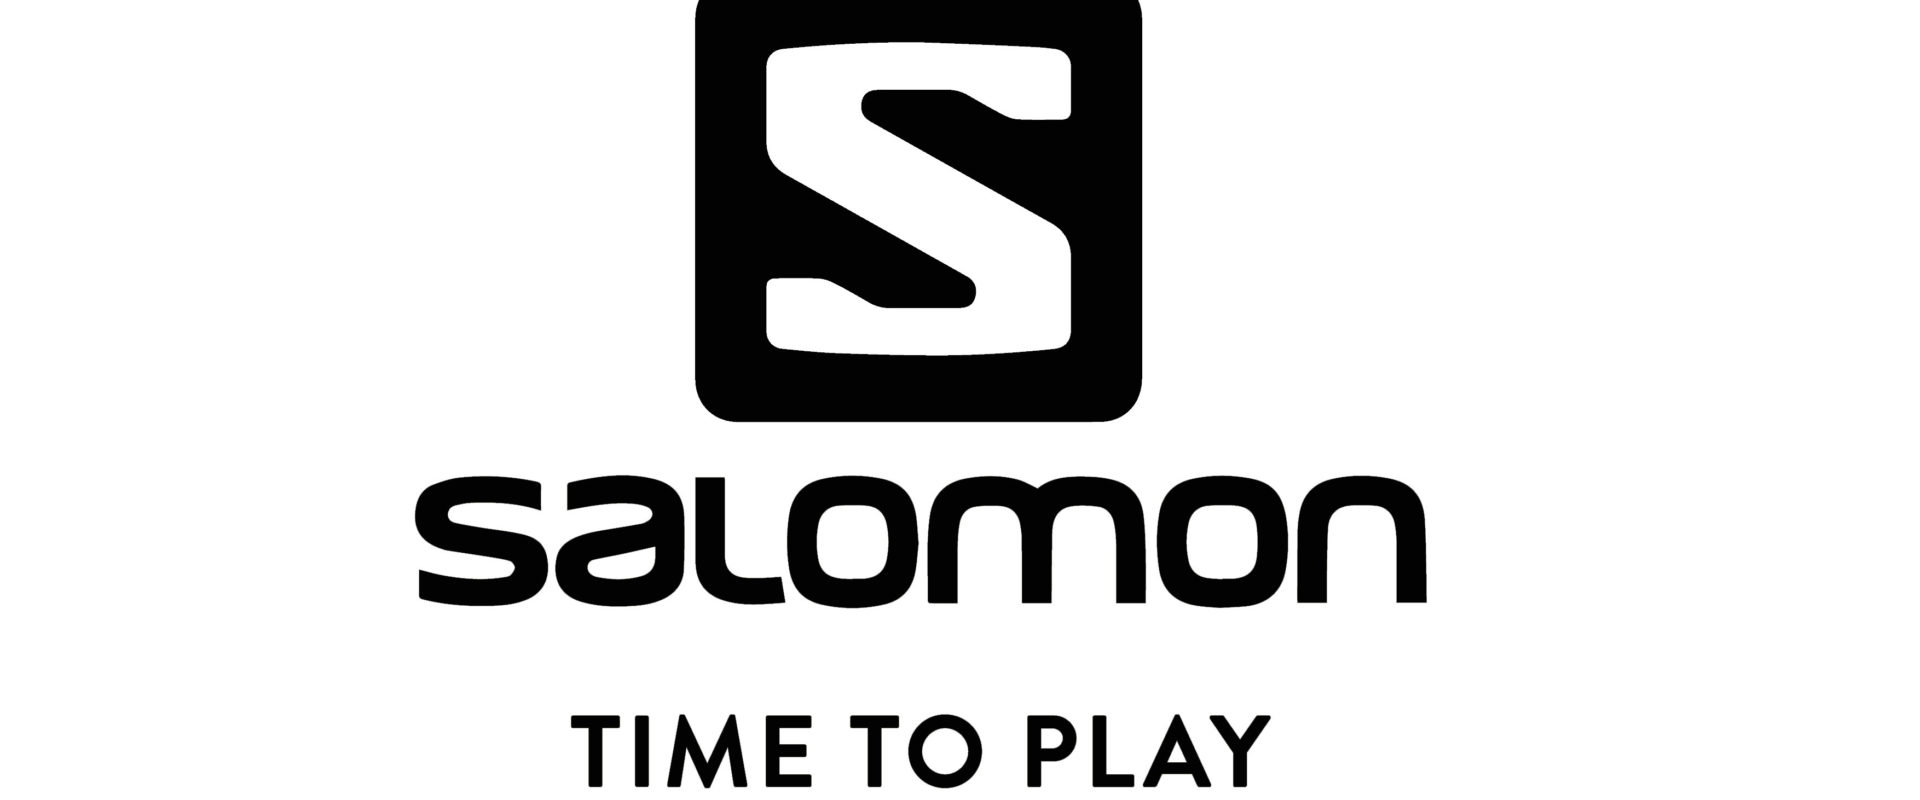 Salomon marque vetement et équipement outdoor